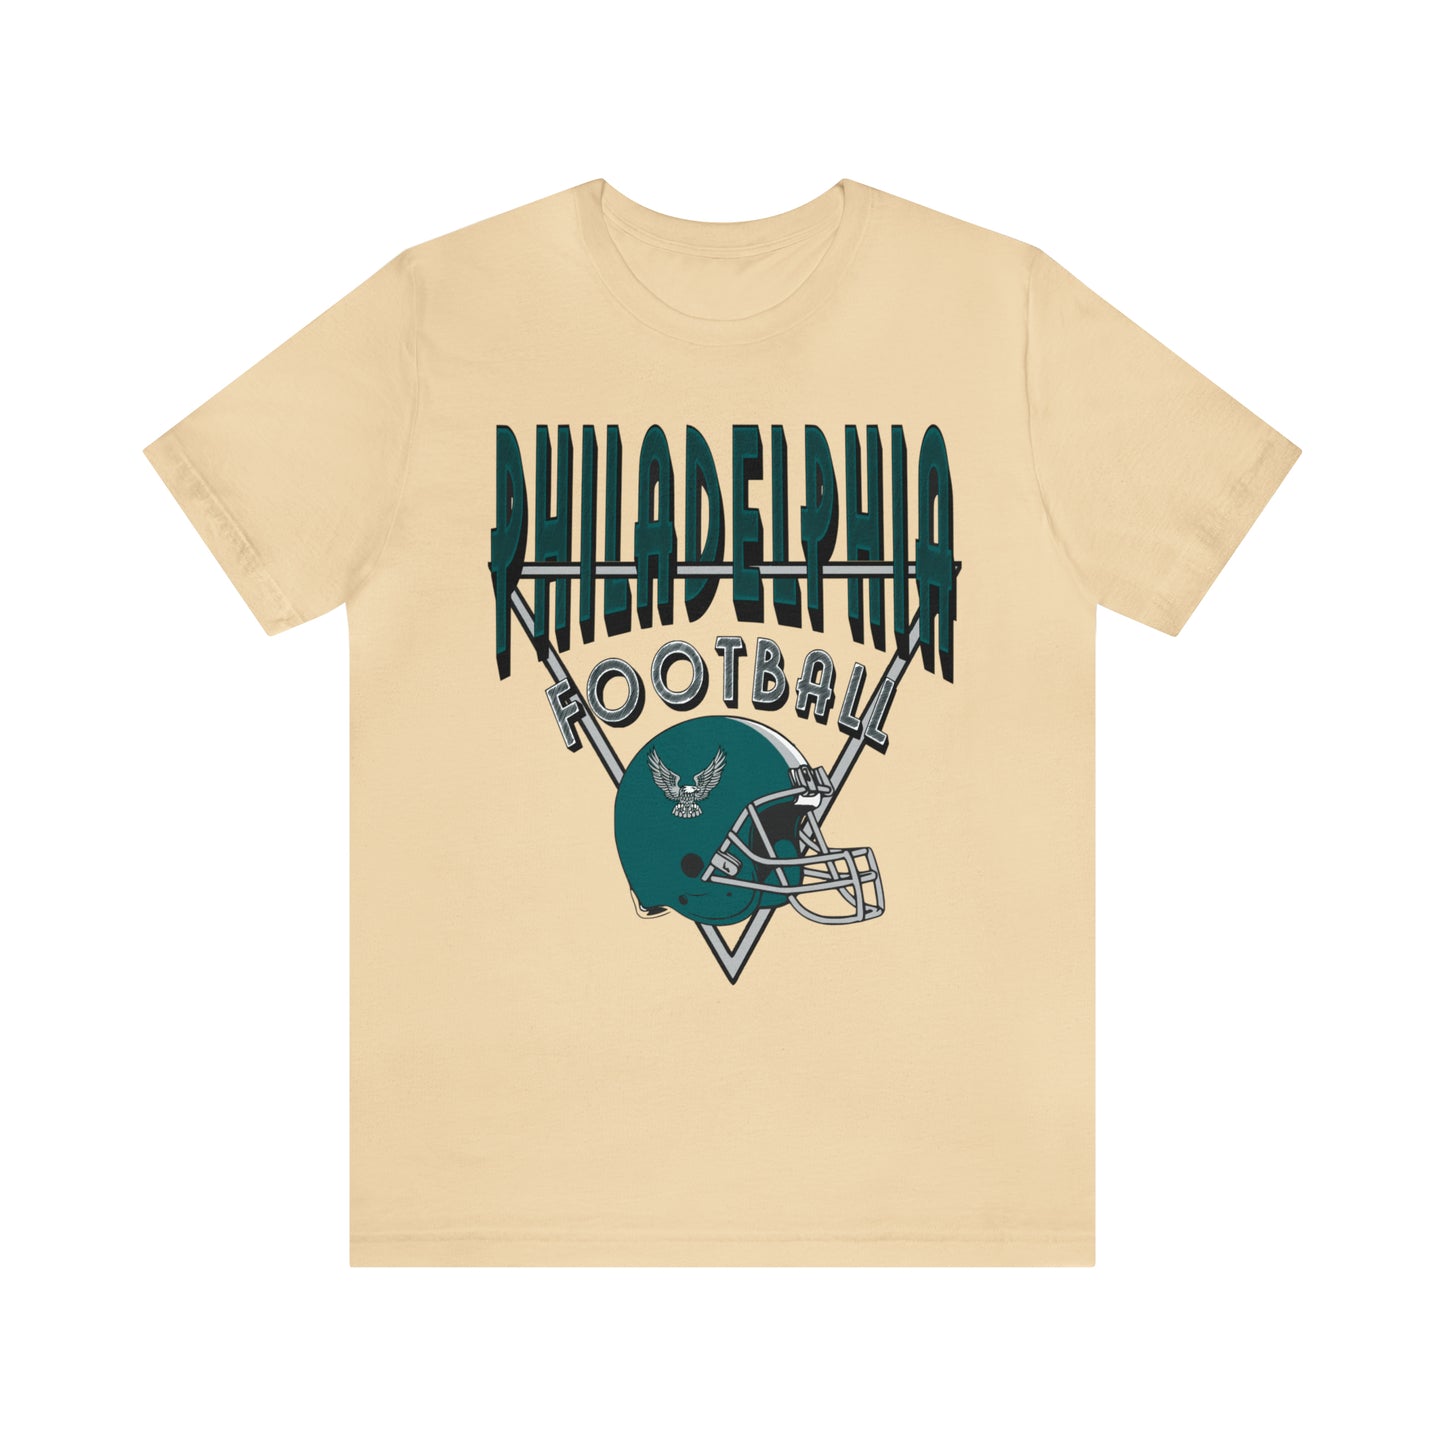 Teal Vintage Philadelphia Eagles Tee - 90's Short Sleeve T-Shirt - NFL Football Men's & Women's Apparel - Design 3